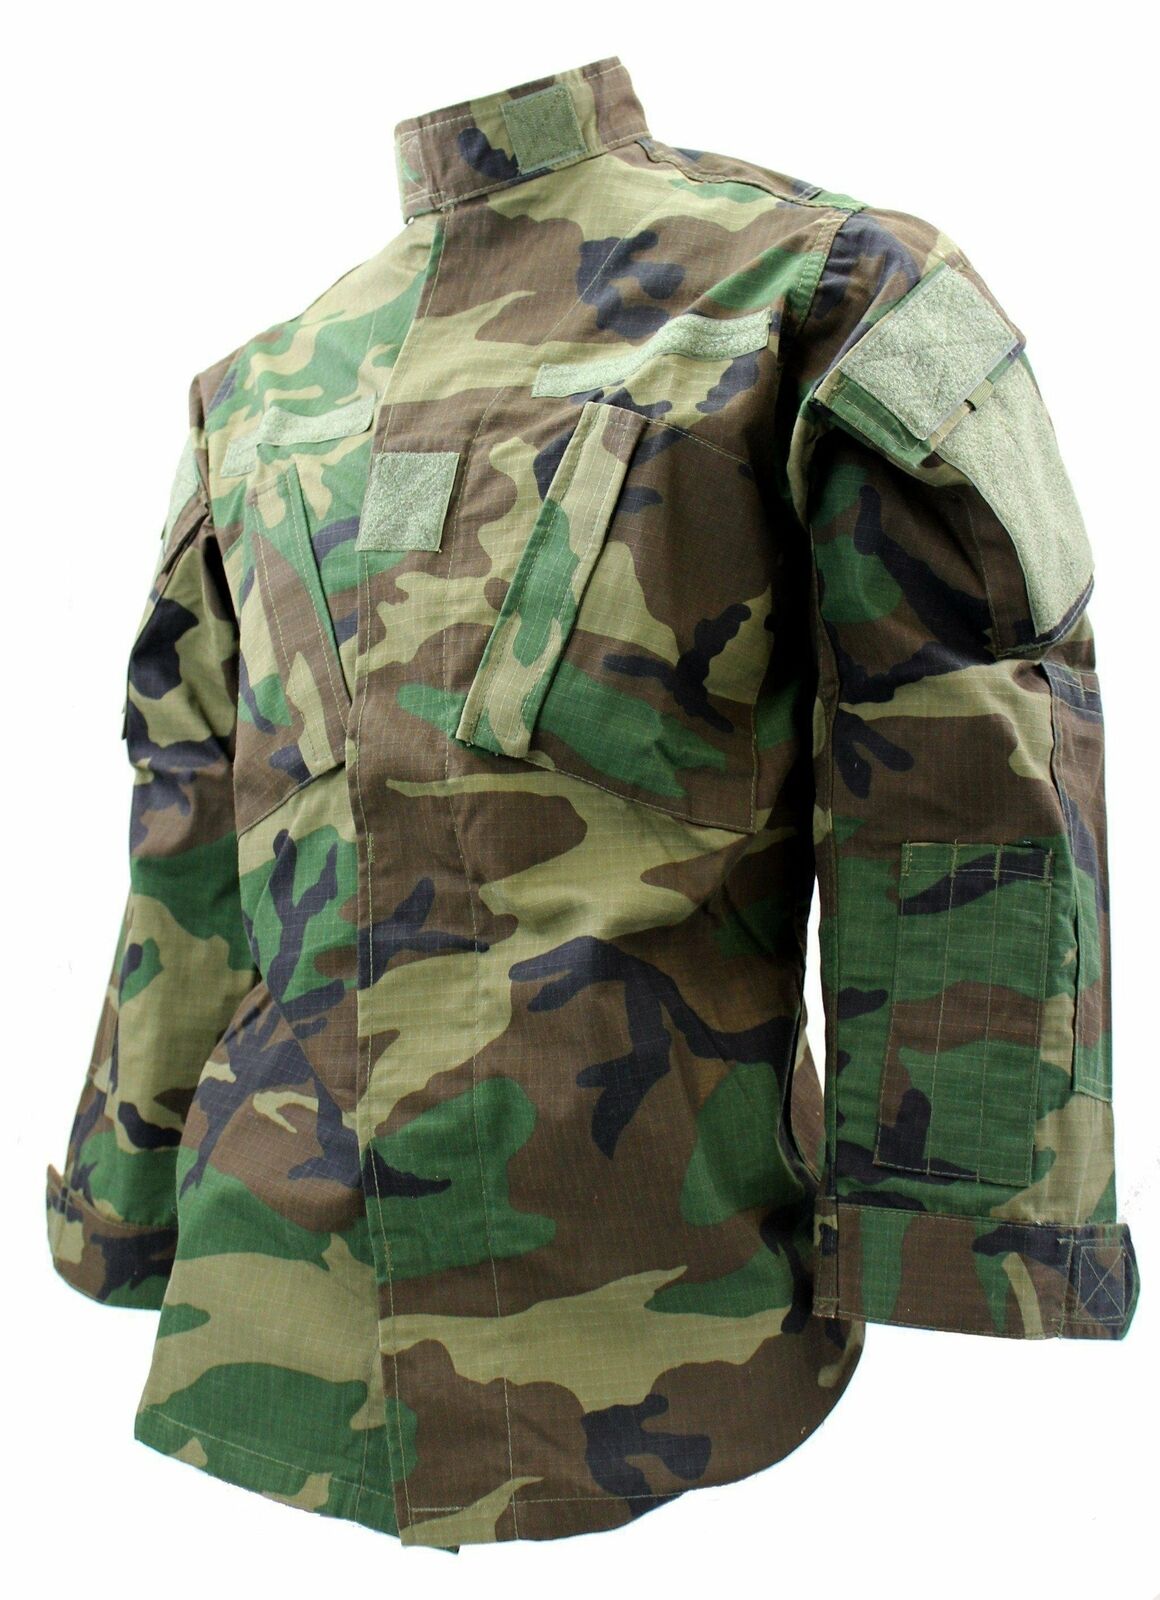 Woodland Camo BDU Army Jacket - Large